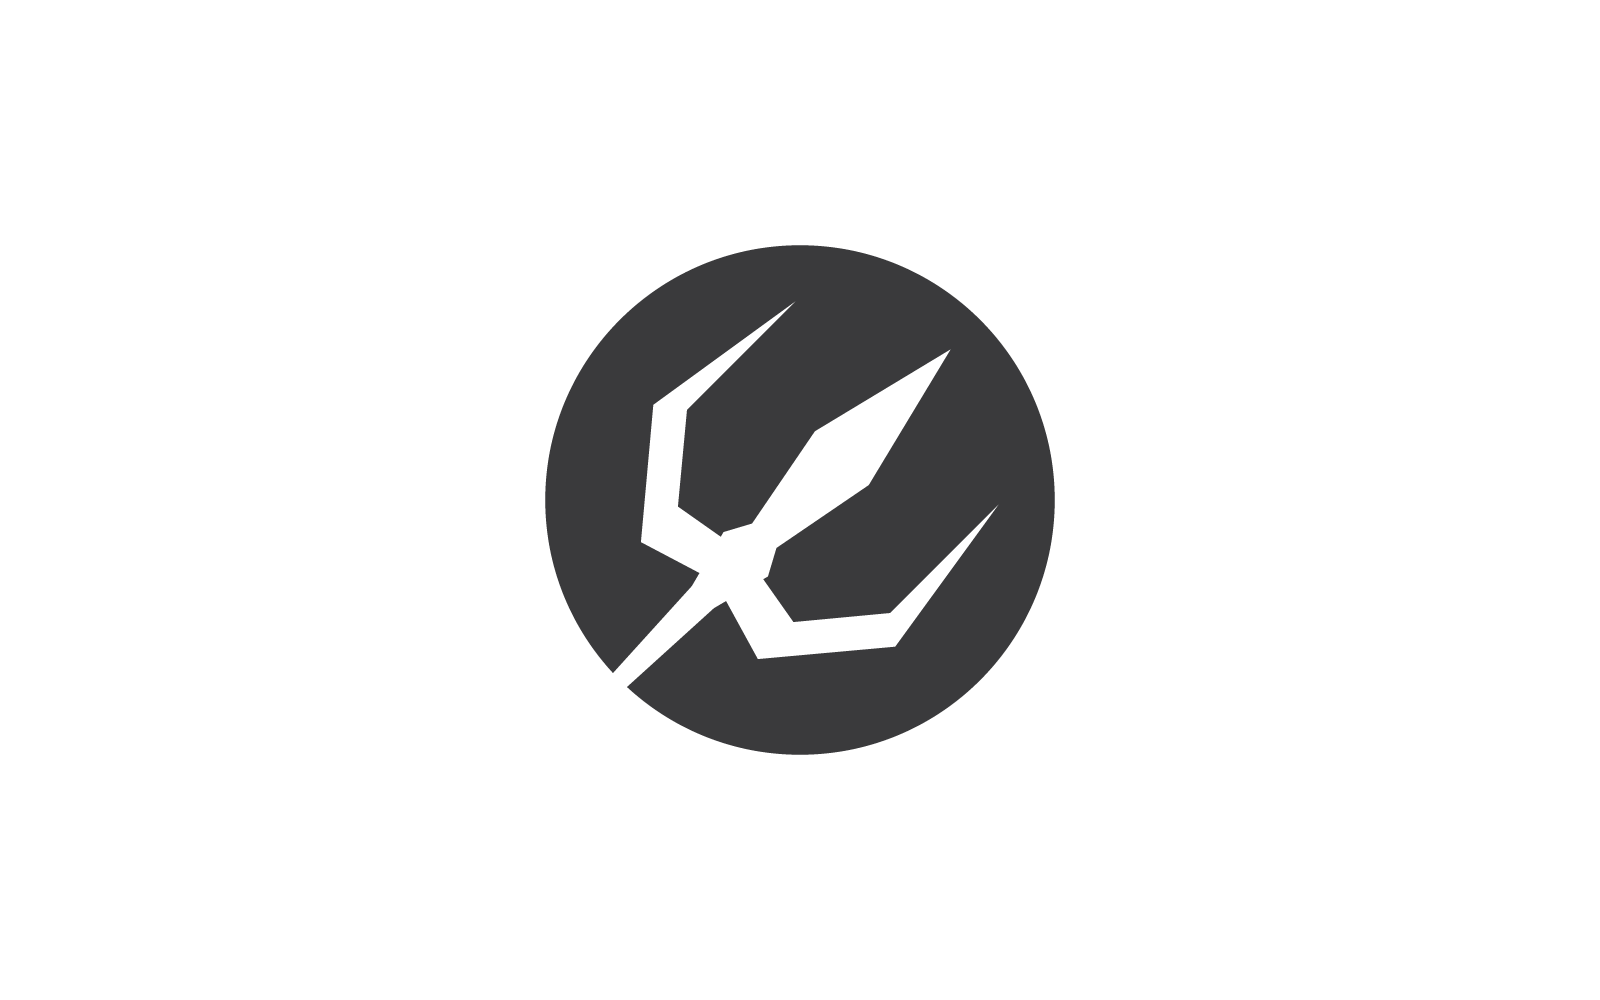 Trident devil Logo illustration icon vector design